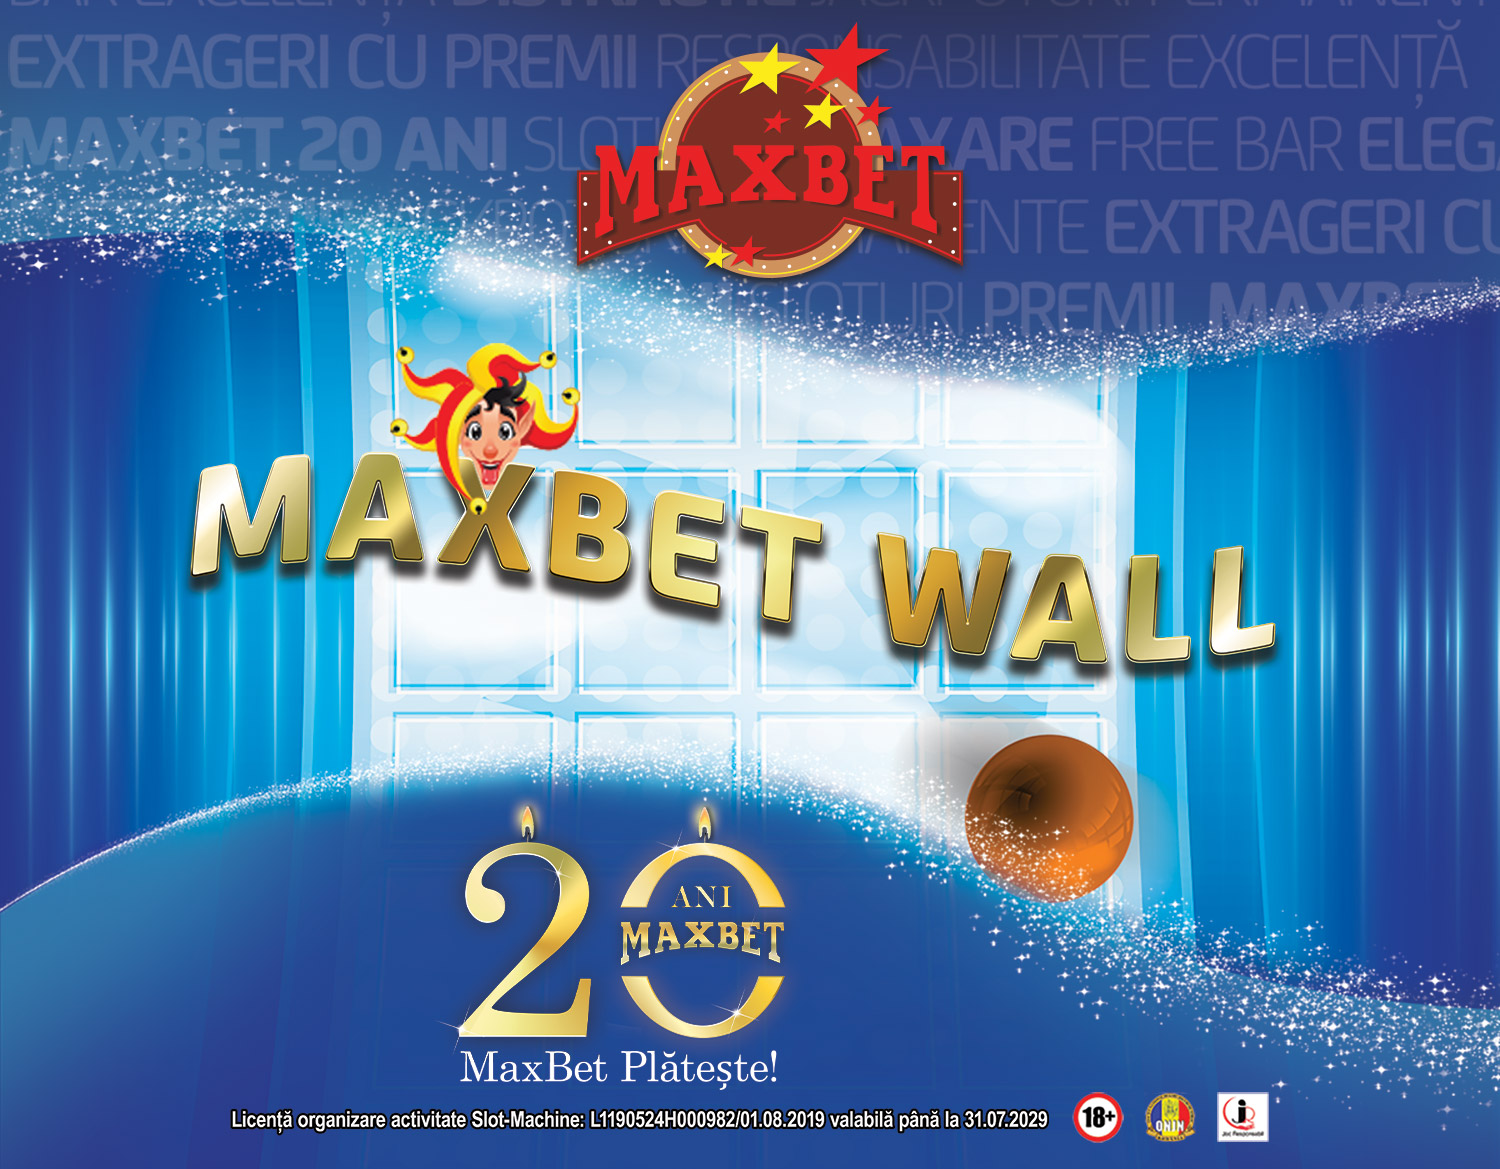 MaxBet Wall